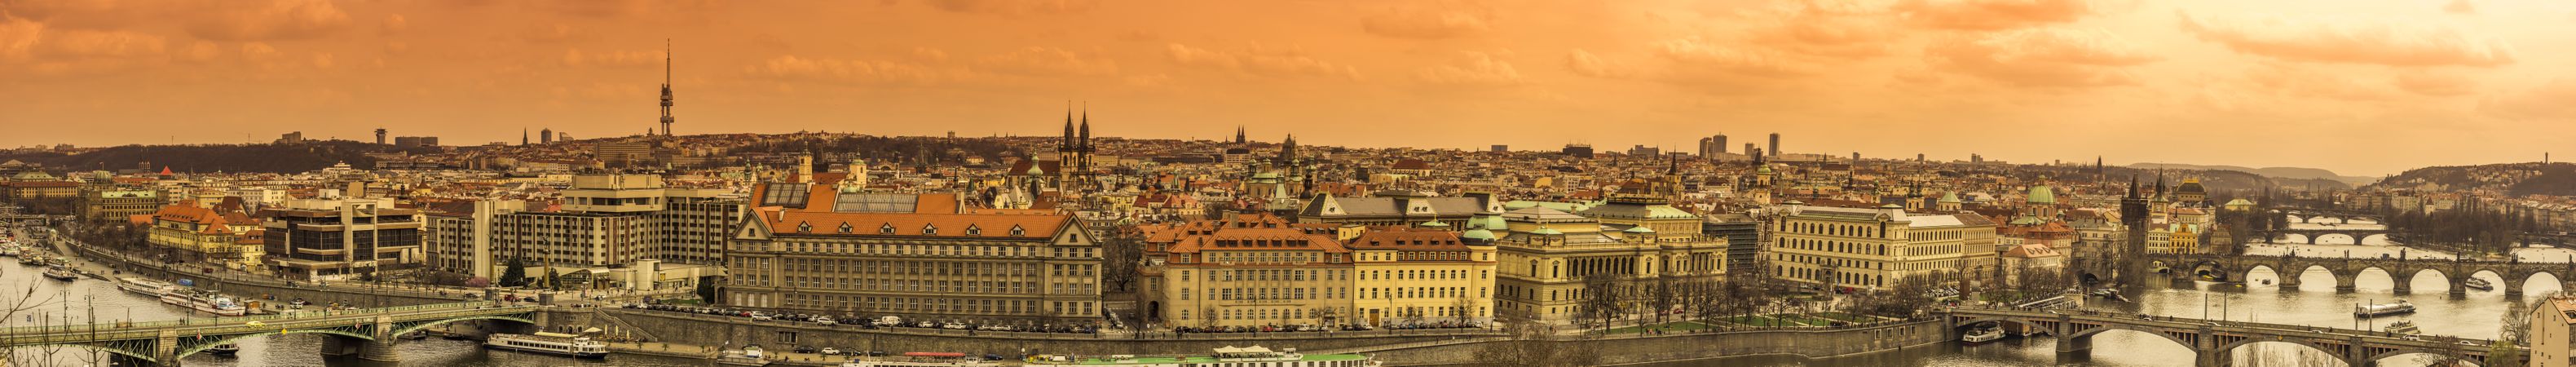 Prague city panoramic view